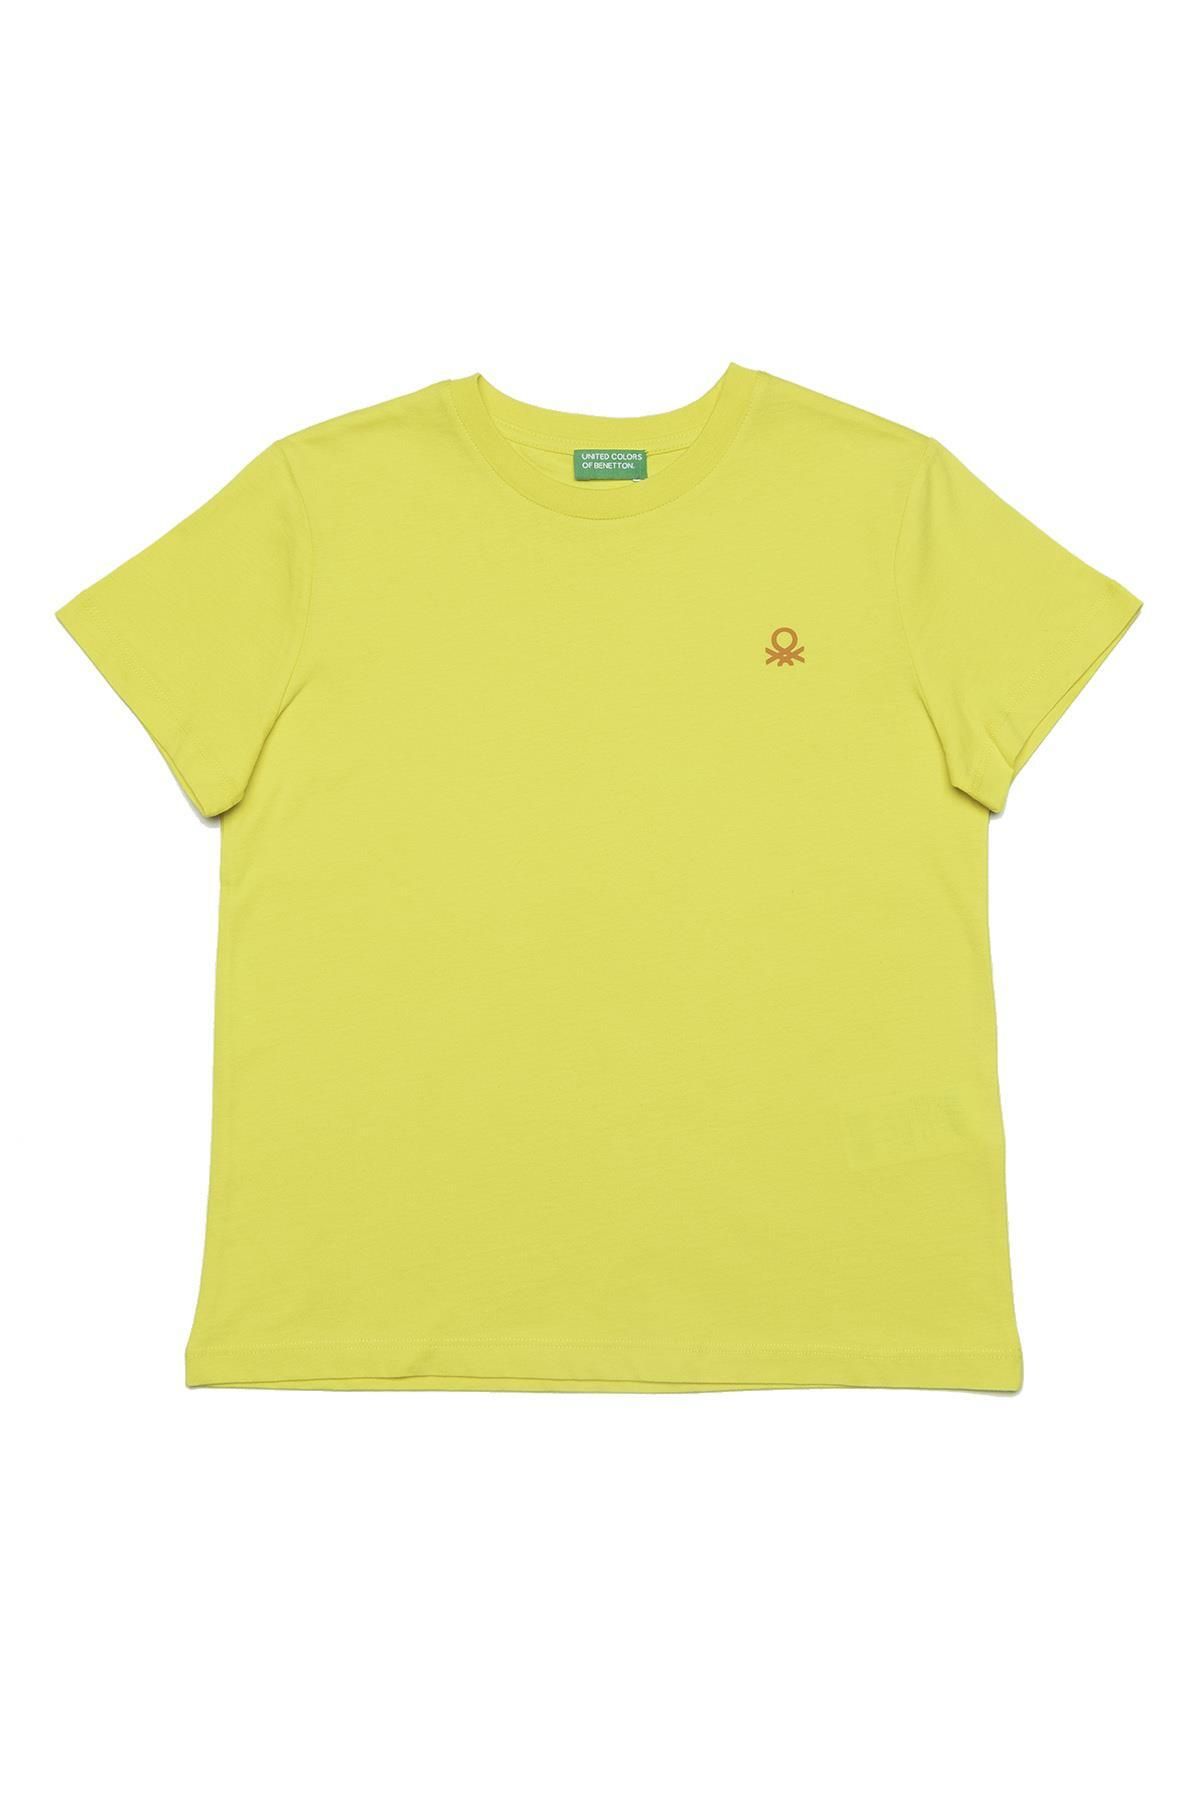 United Colors of Benetton Erkek Çocuk T-shirt Bnt-b20557